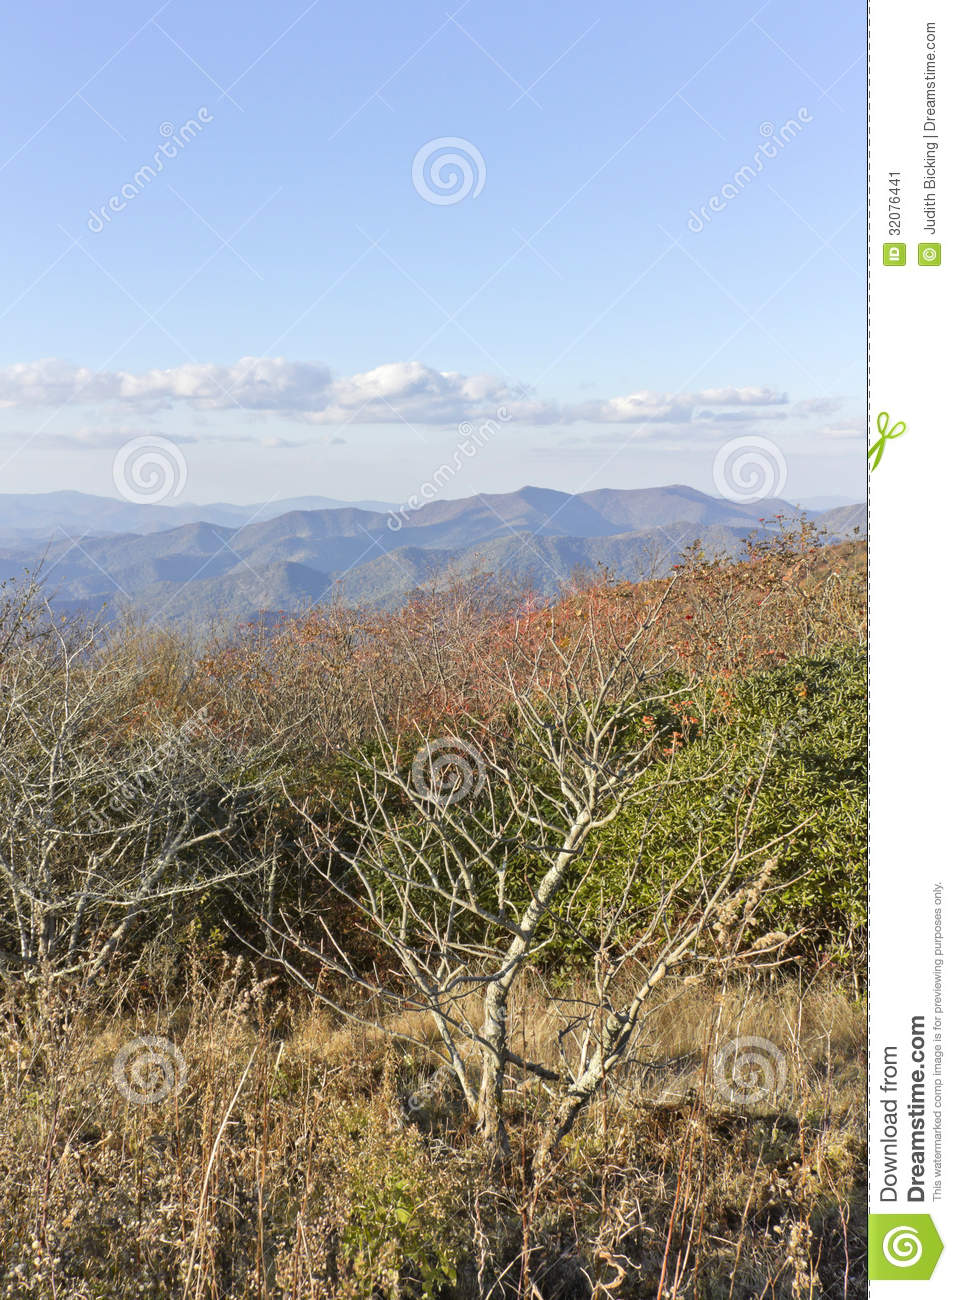 Appalachian Mountain View In Autumn Stock Image   Image  32076441